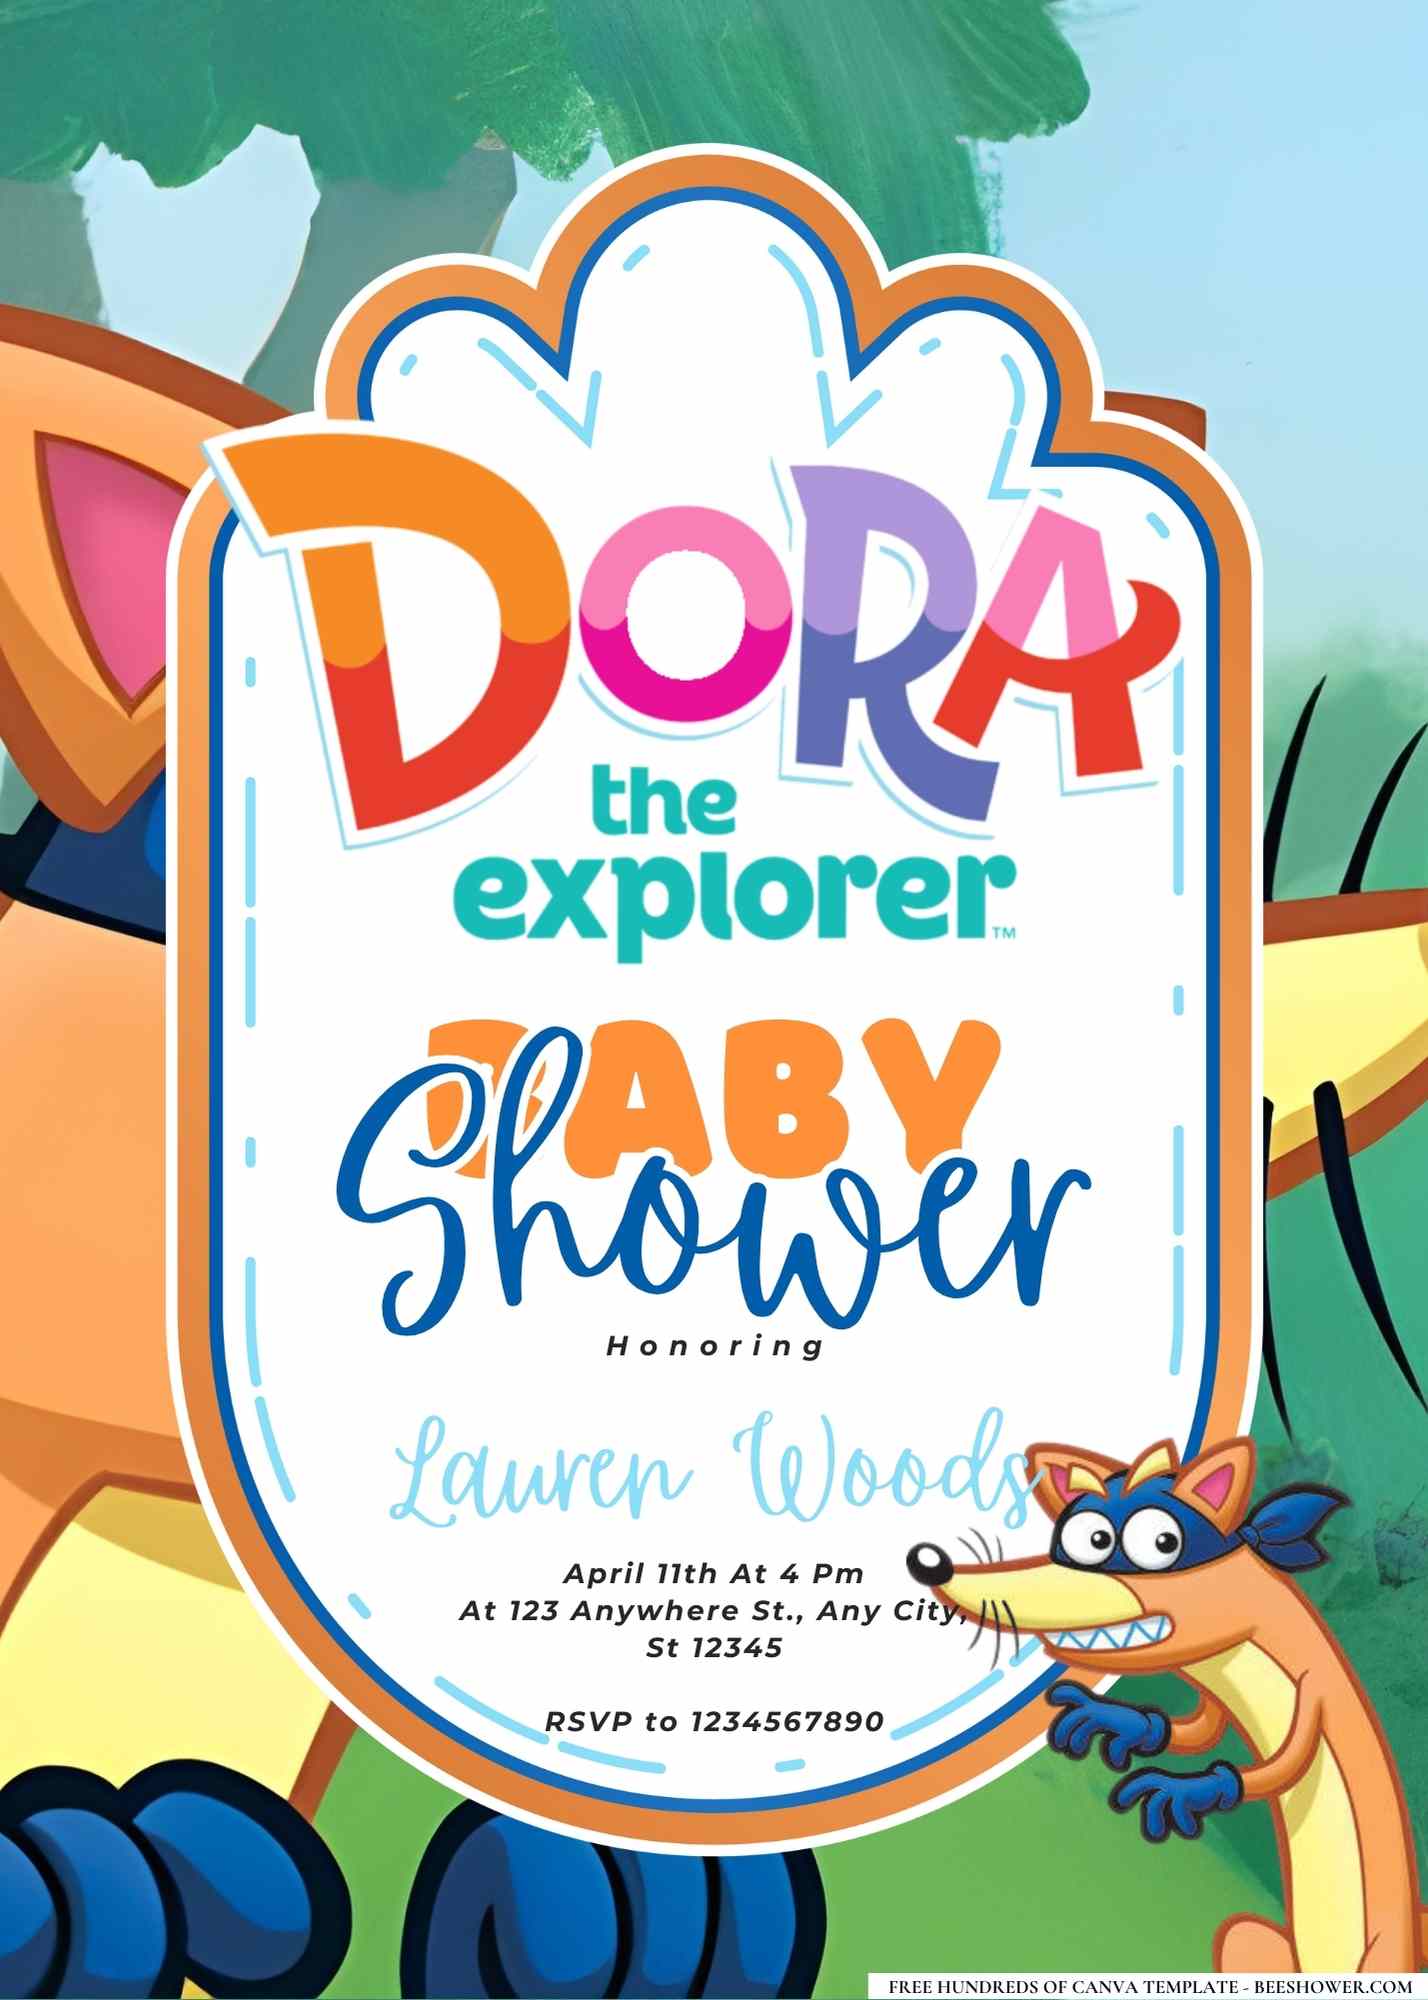 Swiper (Dora the Explorer) Baby Shower Invitation